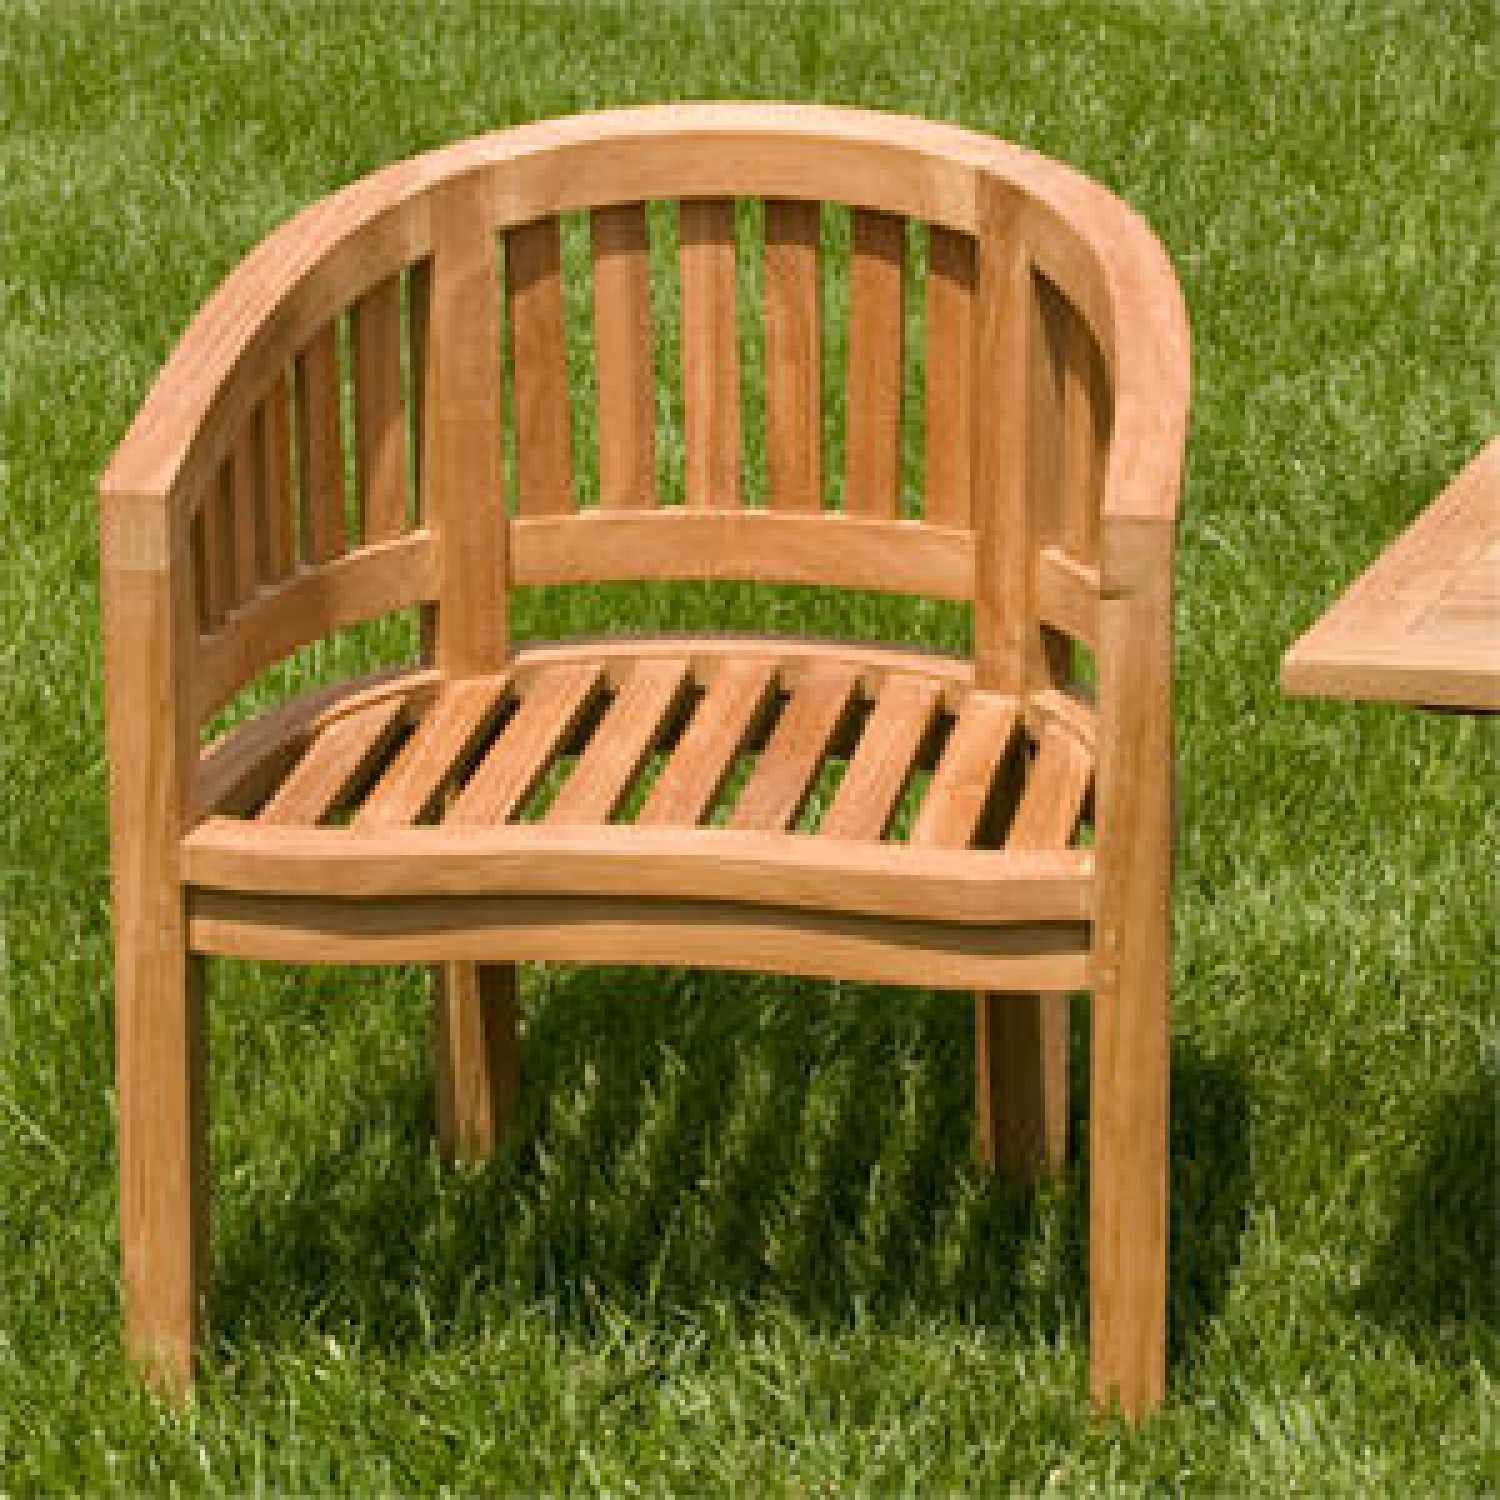 teak chairs outdoor furniture photo - 7